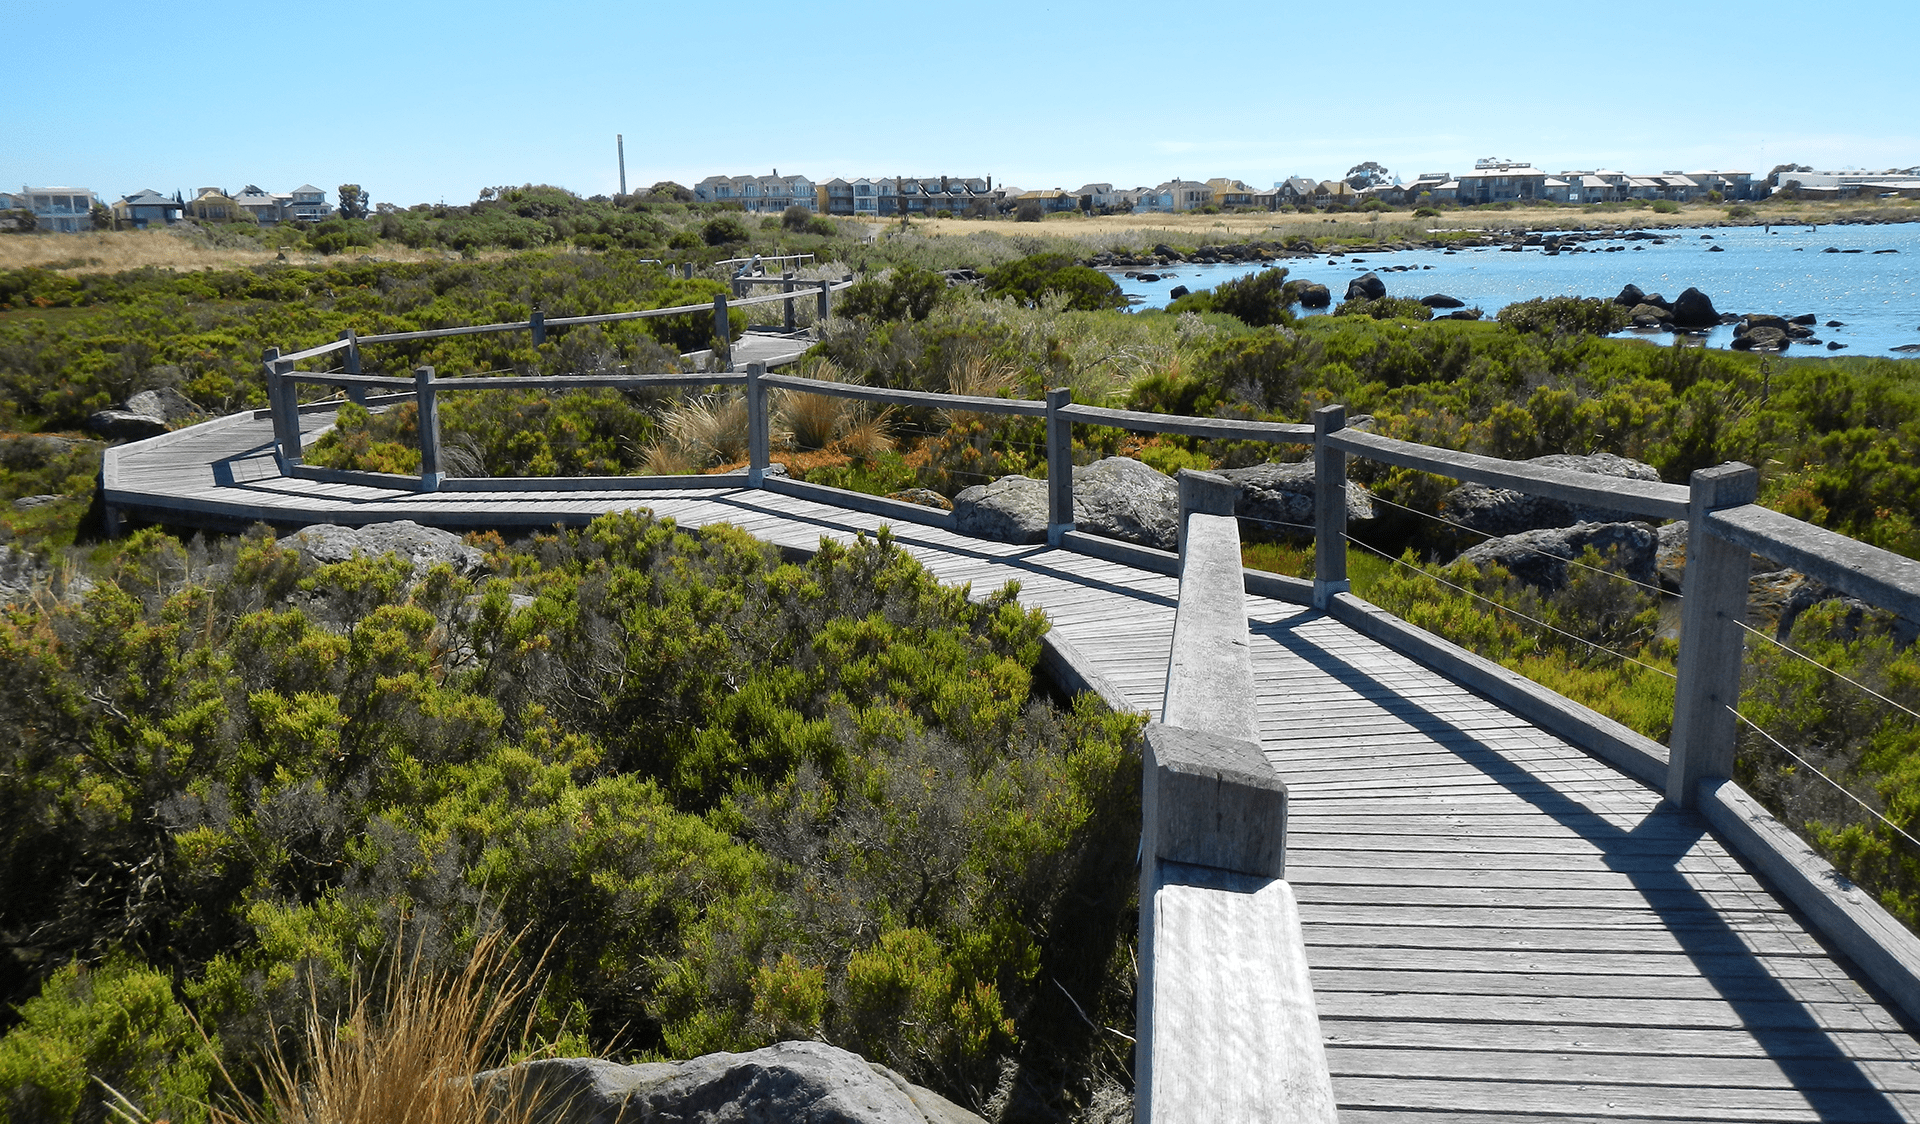 The boardwalk at Jawbone Marine Sanctuary